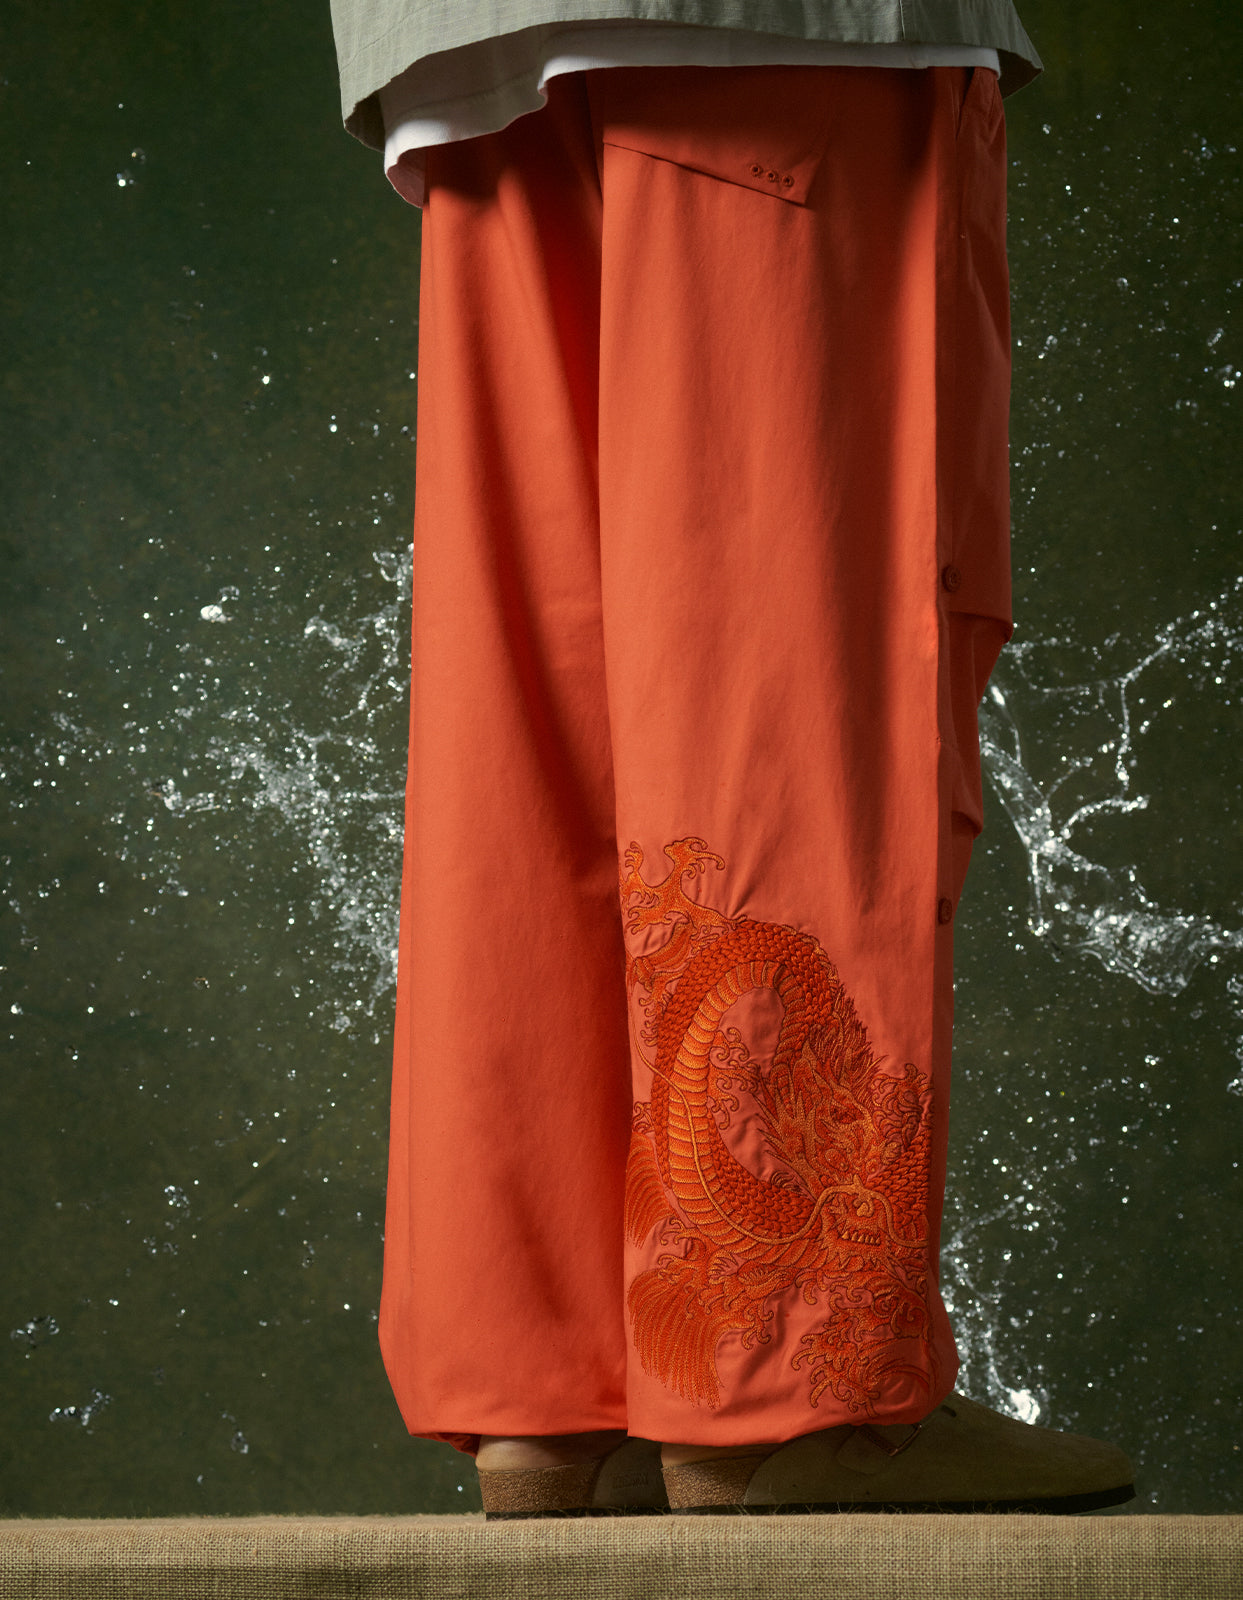 4244 Water Dragon Embroidered Loose Snopants® Blaze Orange/Tonal